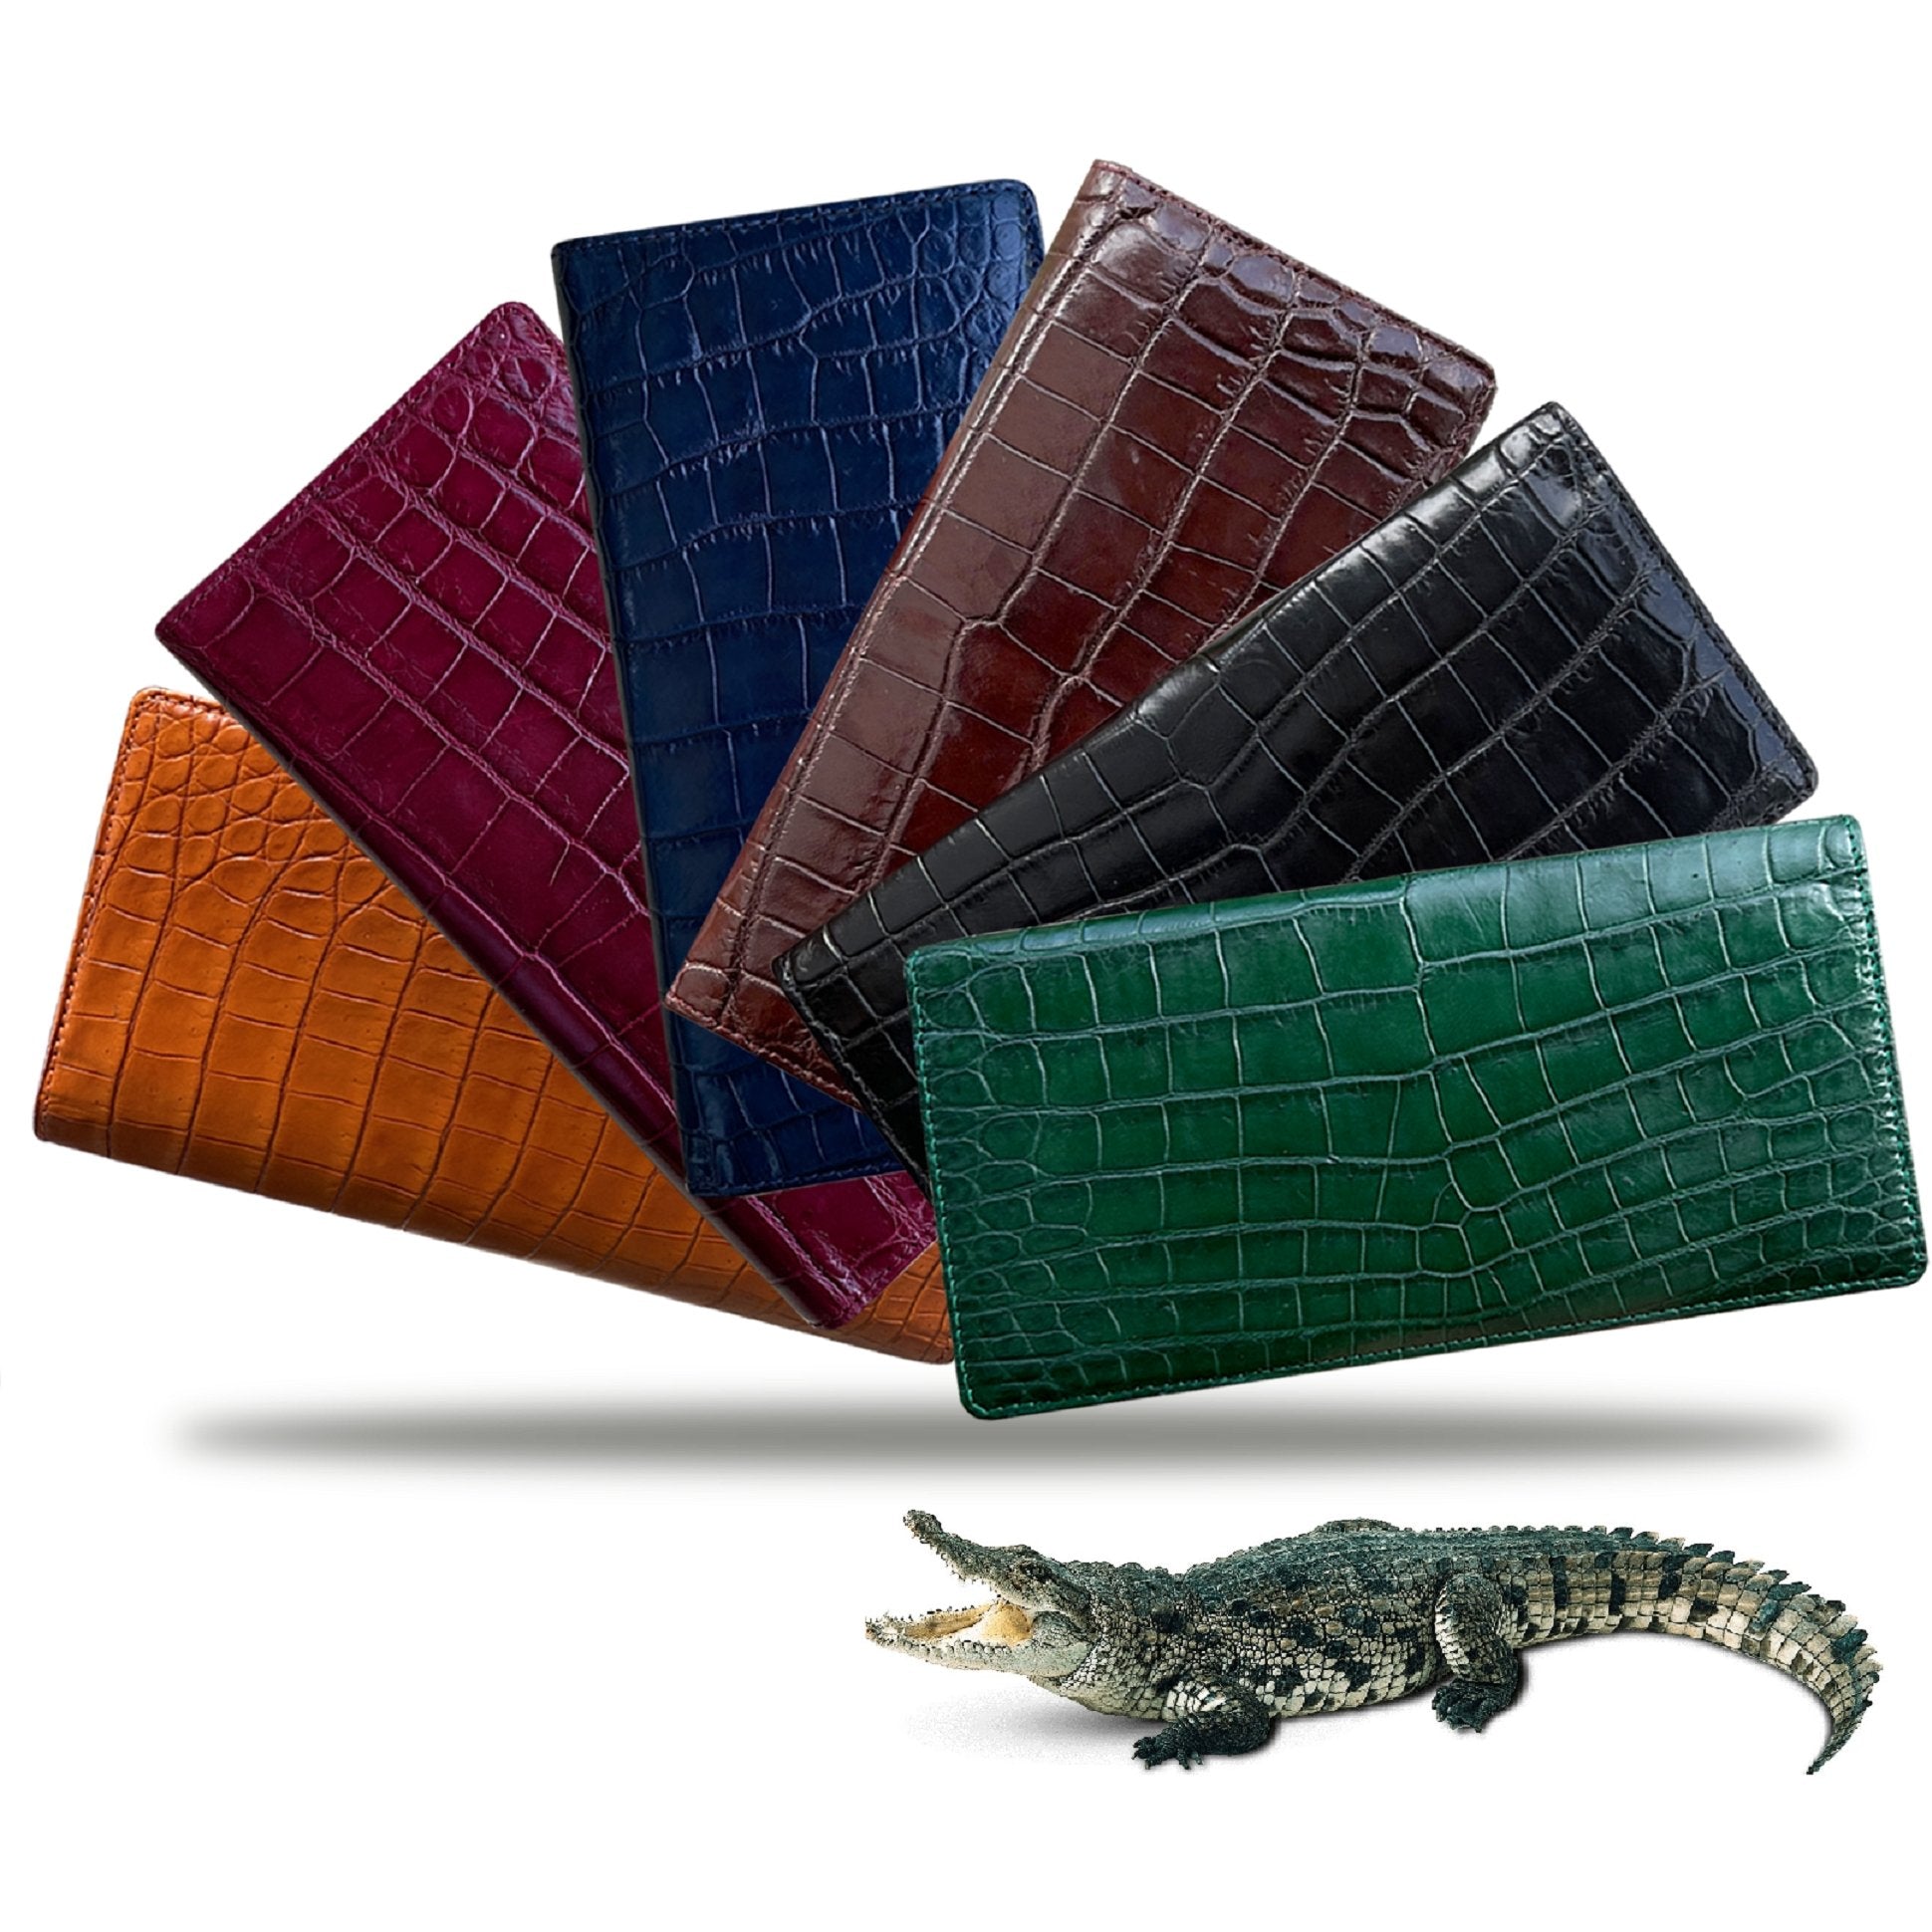 Emerald green crocodile wallet - Luxury leathergoods